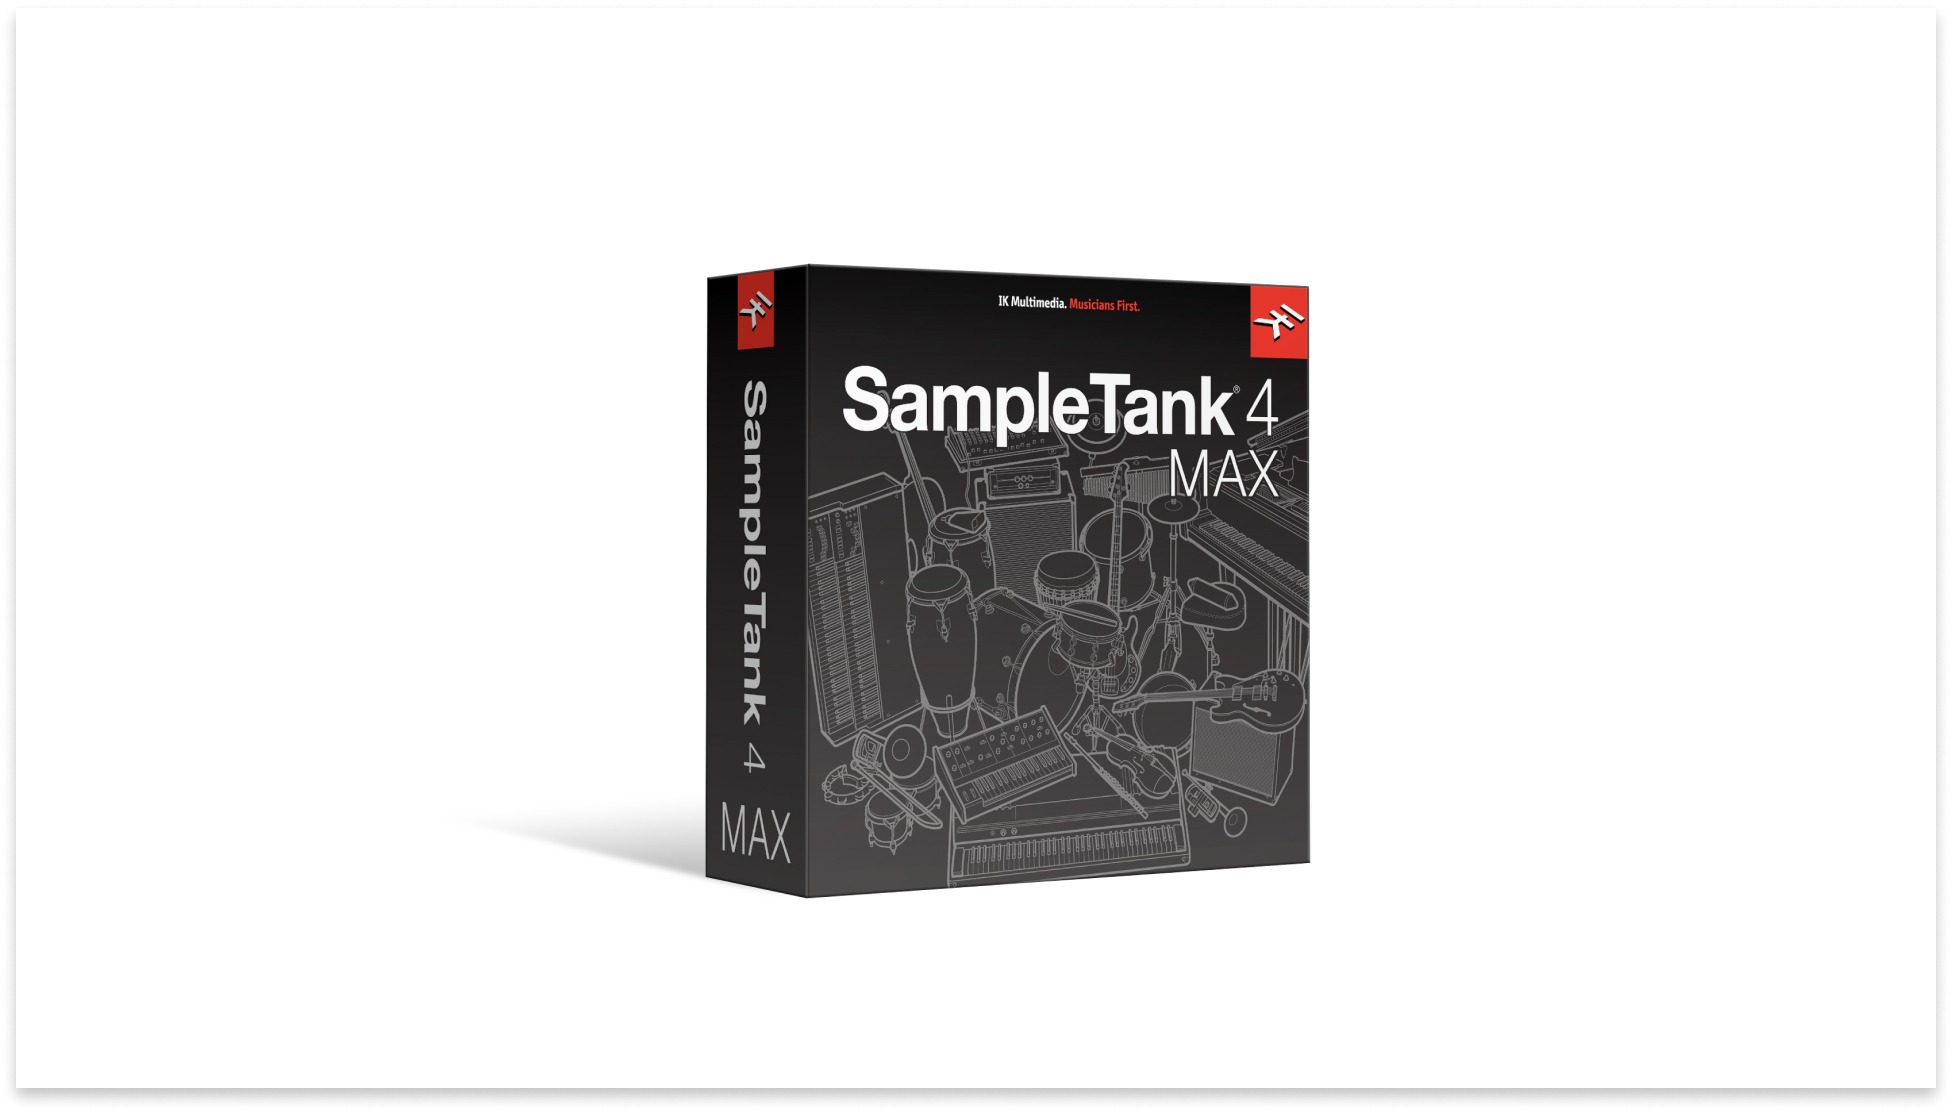 https://blog.landr.com/wp-content/uploads/2022/09/Sample-Tank-4-MAX-Box.jpg